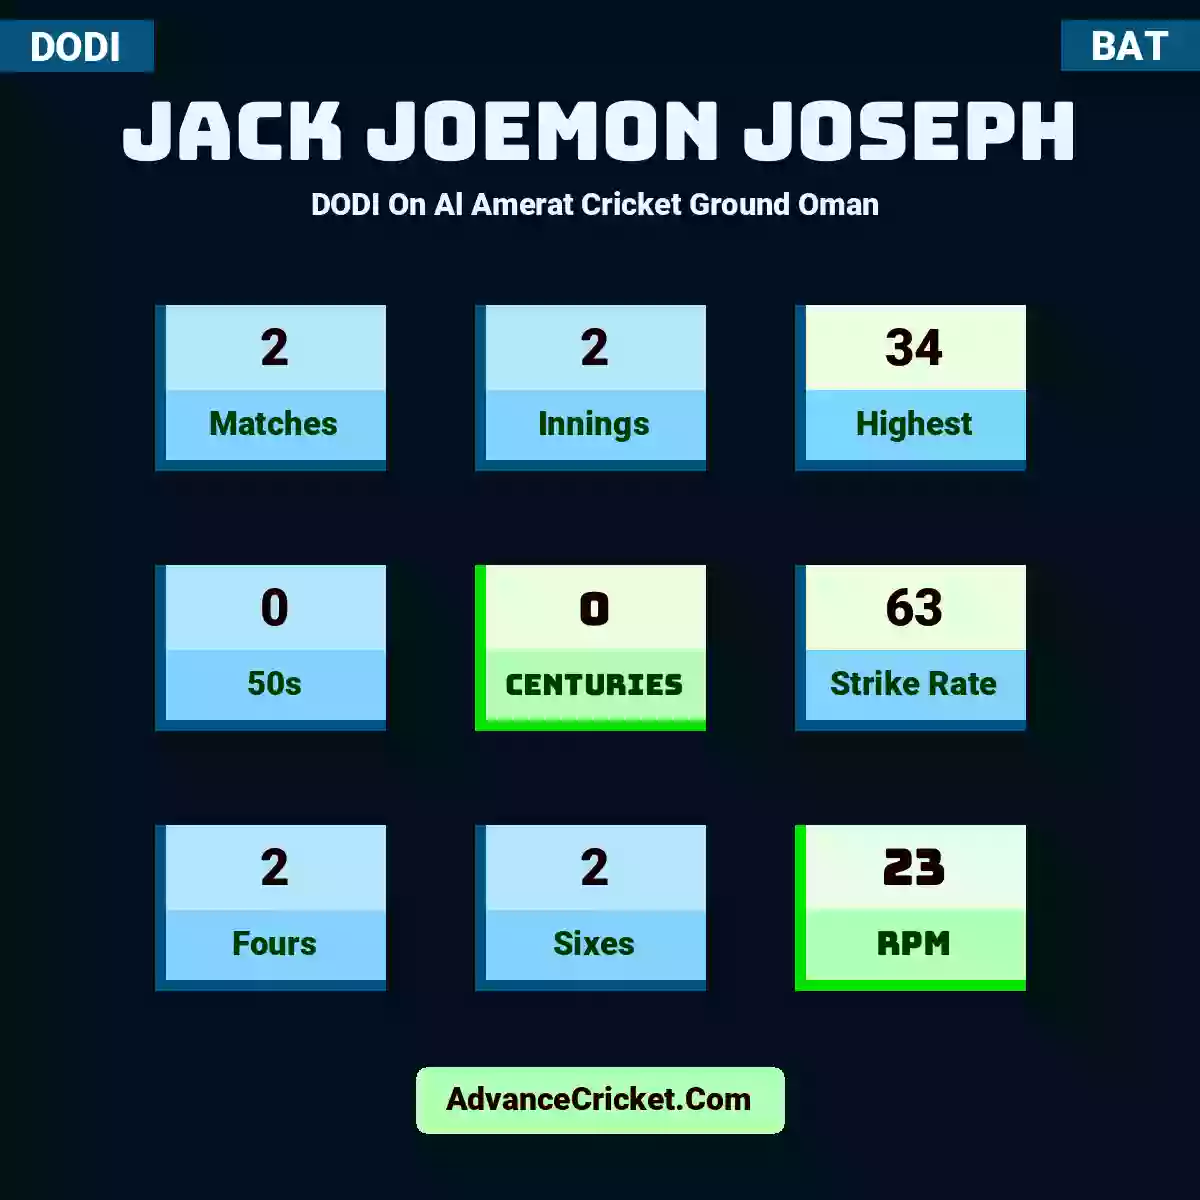 Jack Joemon Joseph DODI  On Al Amerat Cricket Ground Oman , Jack Joemon Joseph played 1 matches, scored 22 runs as highest, 0 half-centuries, and 0 centuries, with a strike rate of 56. J.Joemon.Joseph hit 2 fours and 0 sixes, with an RPM of 22.